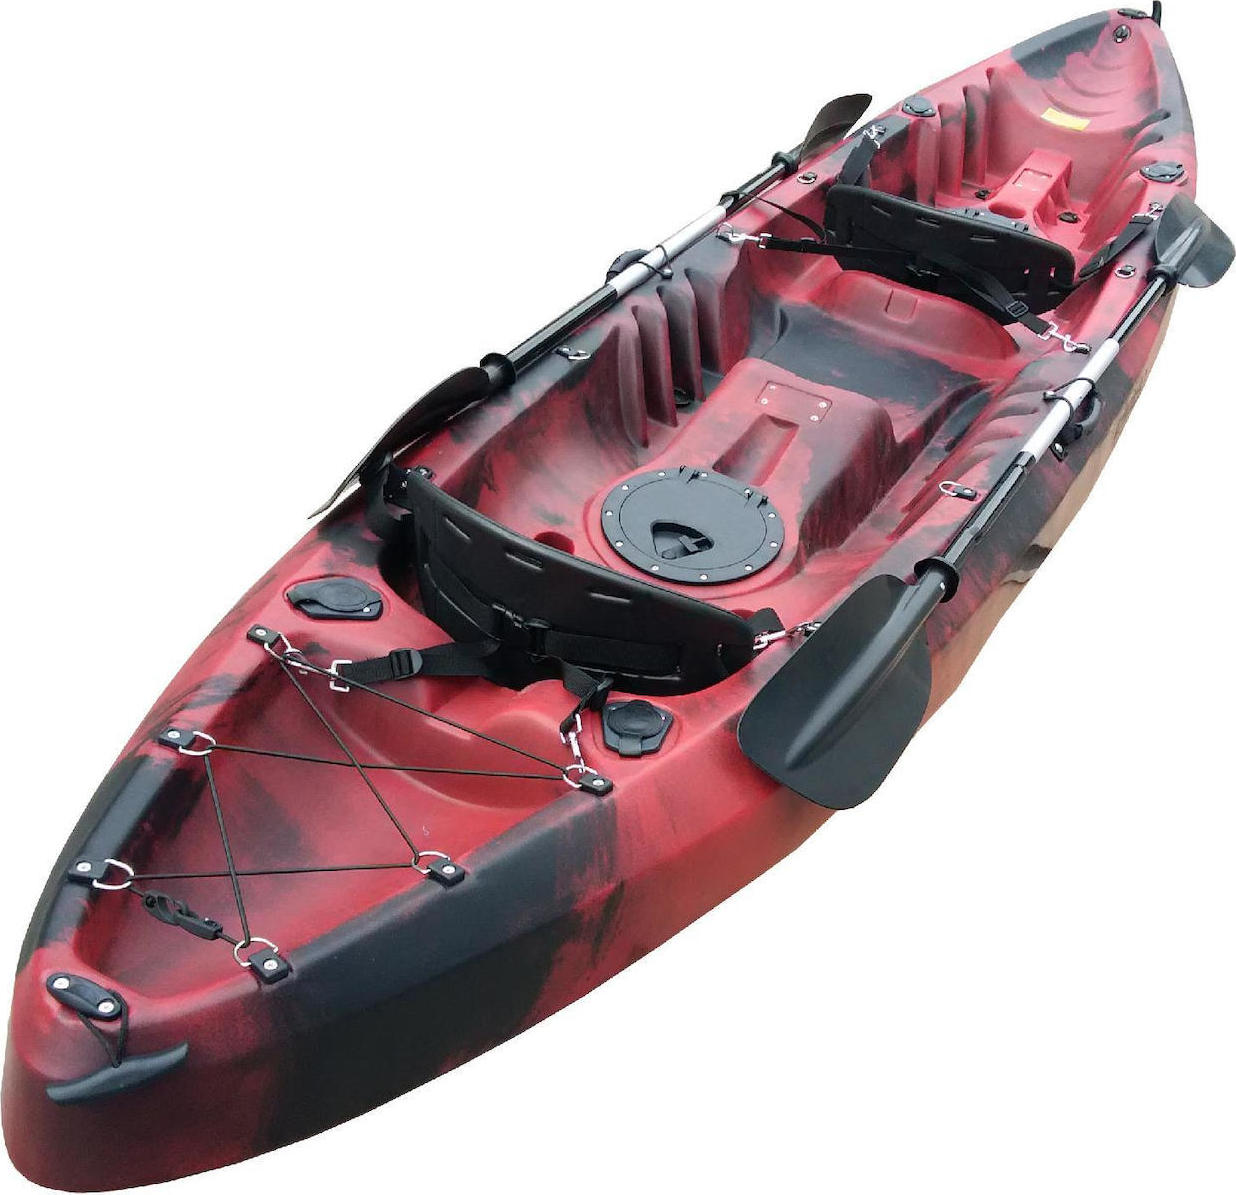 Gobo Companion SOT 0100-0100 Πλαστικό Kayak Θαλάσσης 2 Ατόμων Κόκκινο